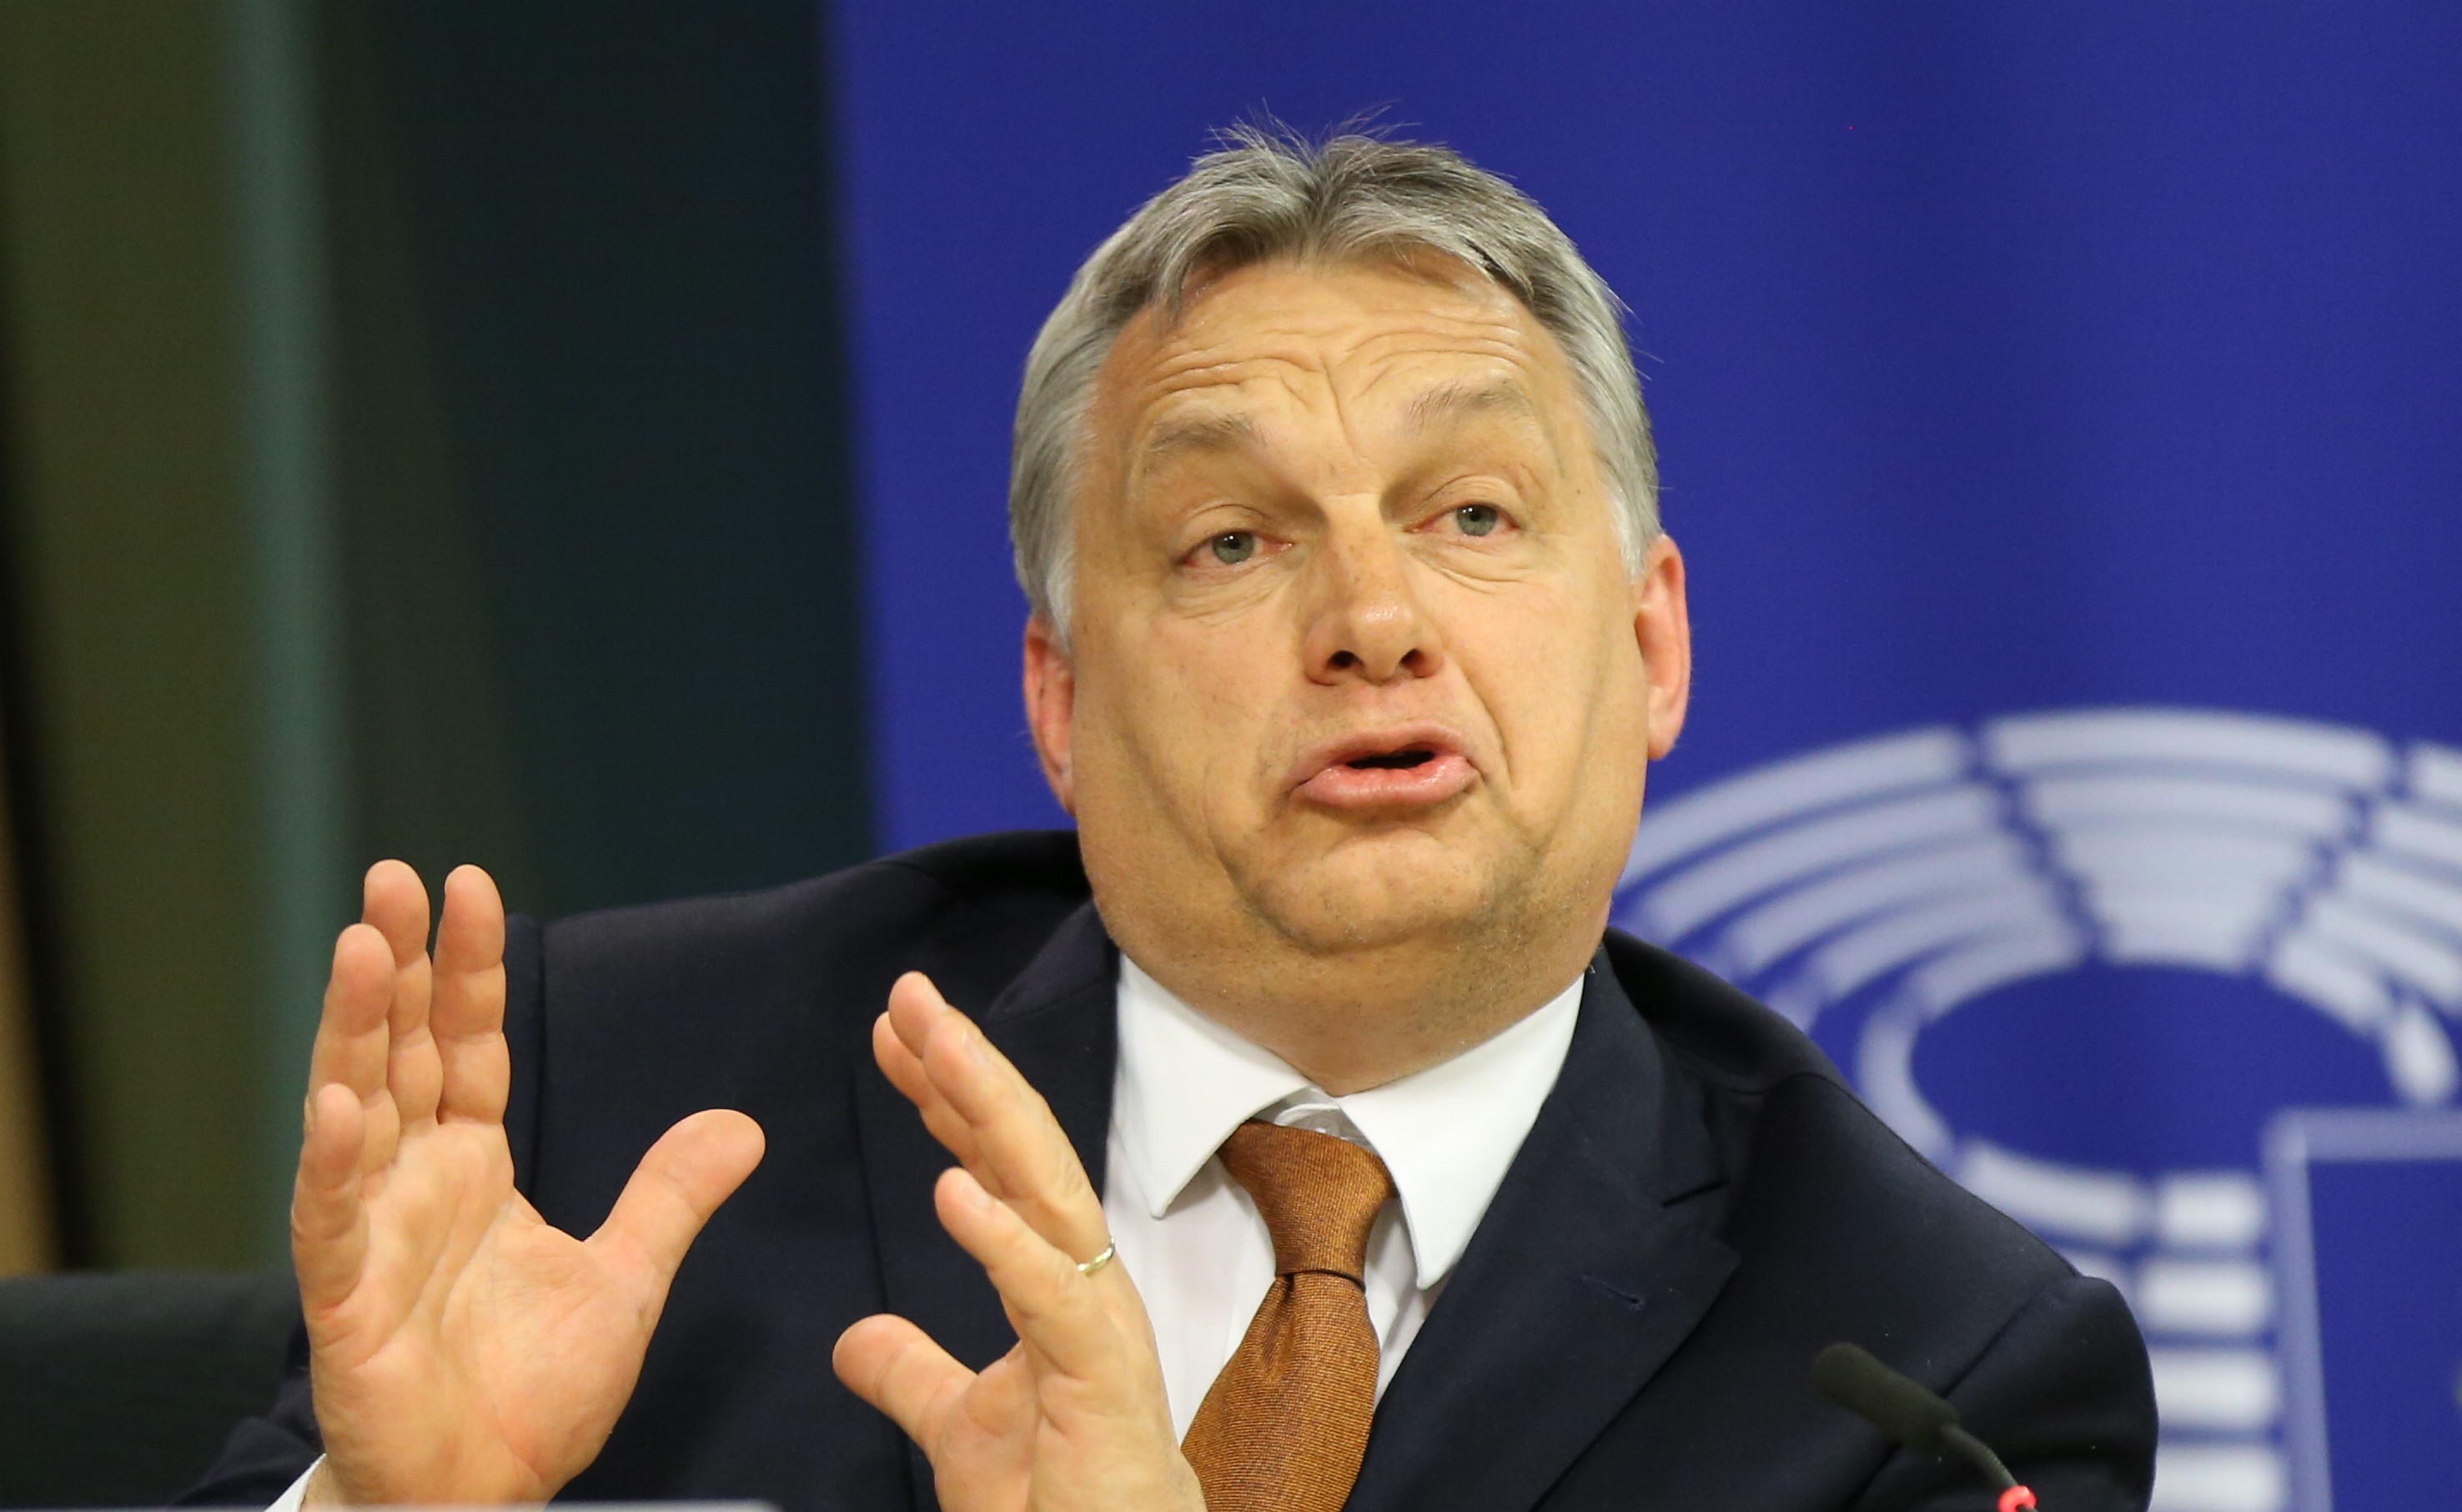 Hová tűnt Orbán Viktor?